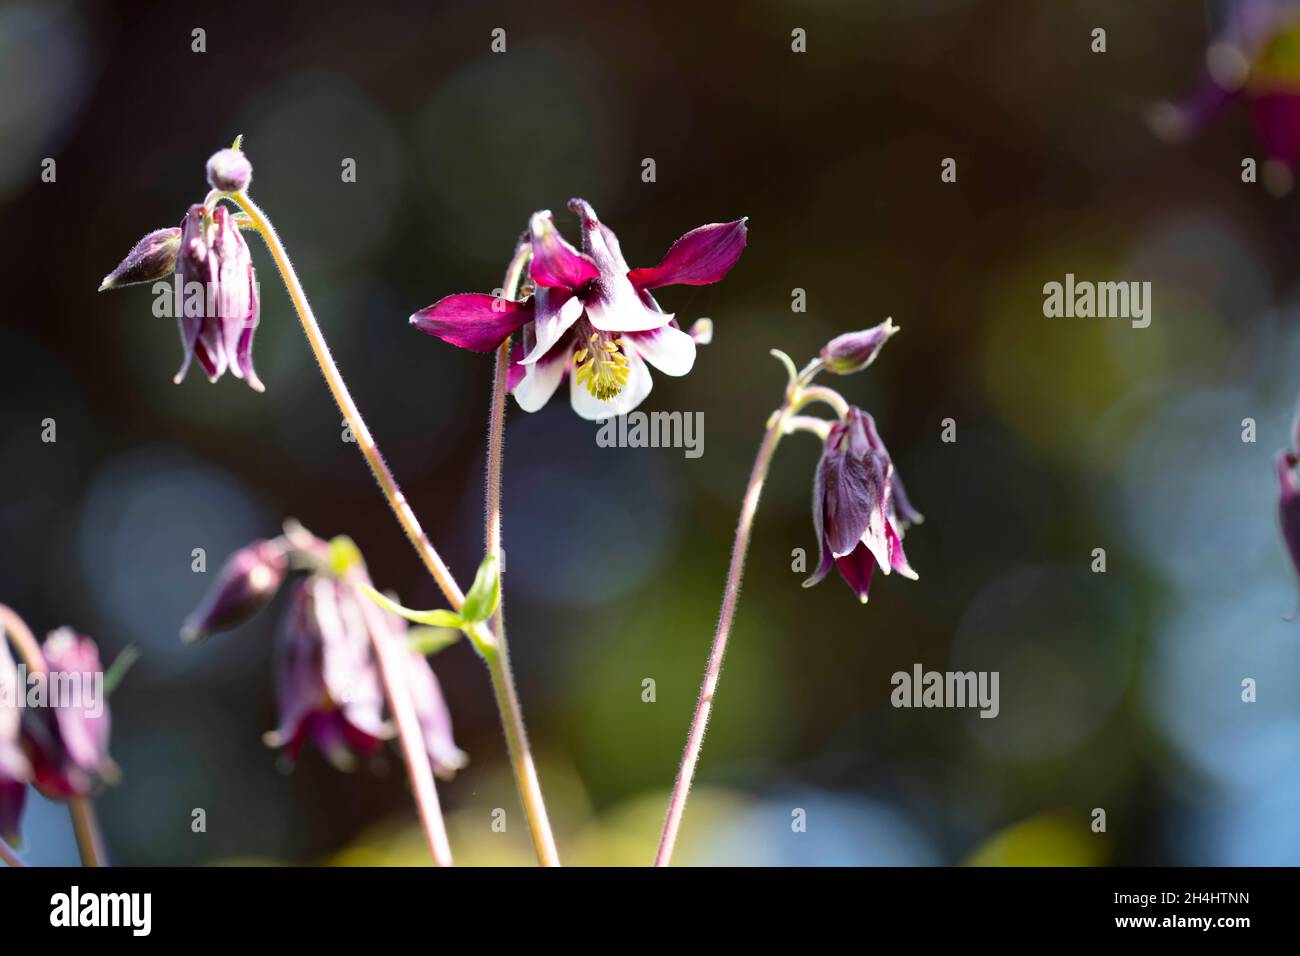 Kurzsporige Akelei (Aquilegia vulgaris) 'William Guiness' dans einem Garten, NRW, Allemagne Banque D'Images